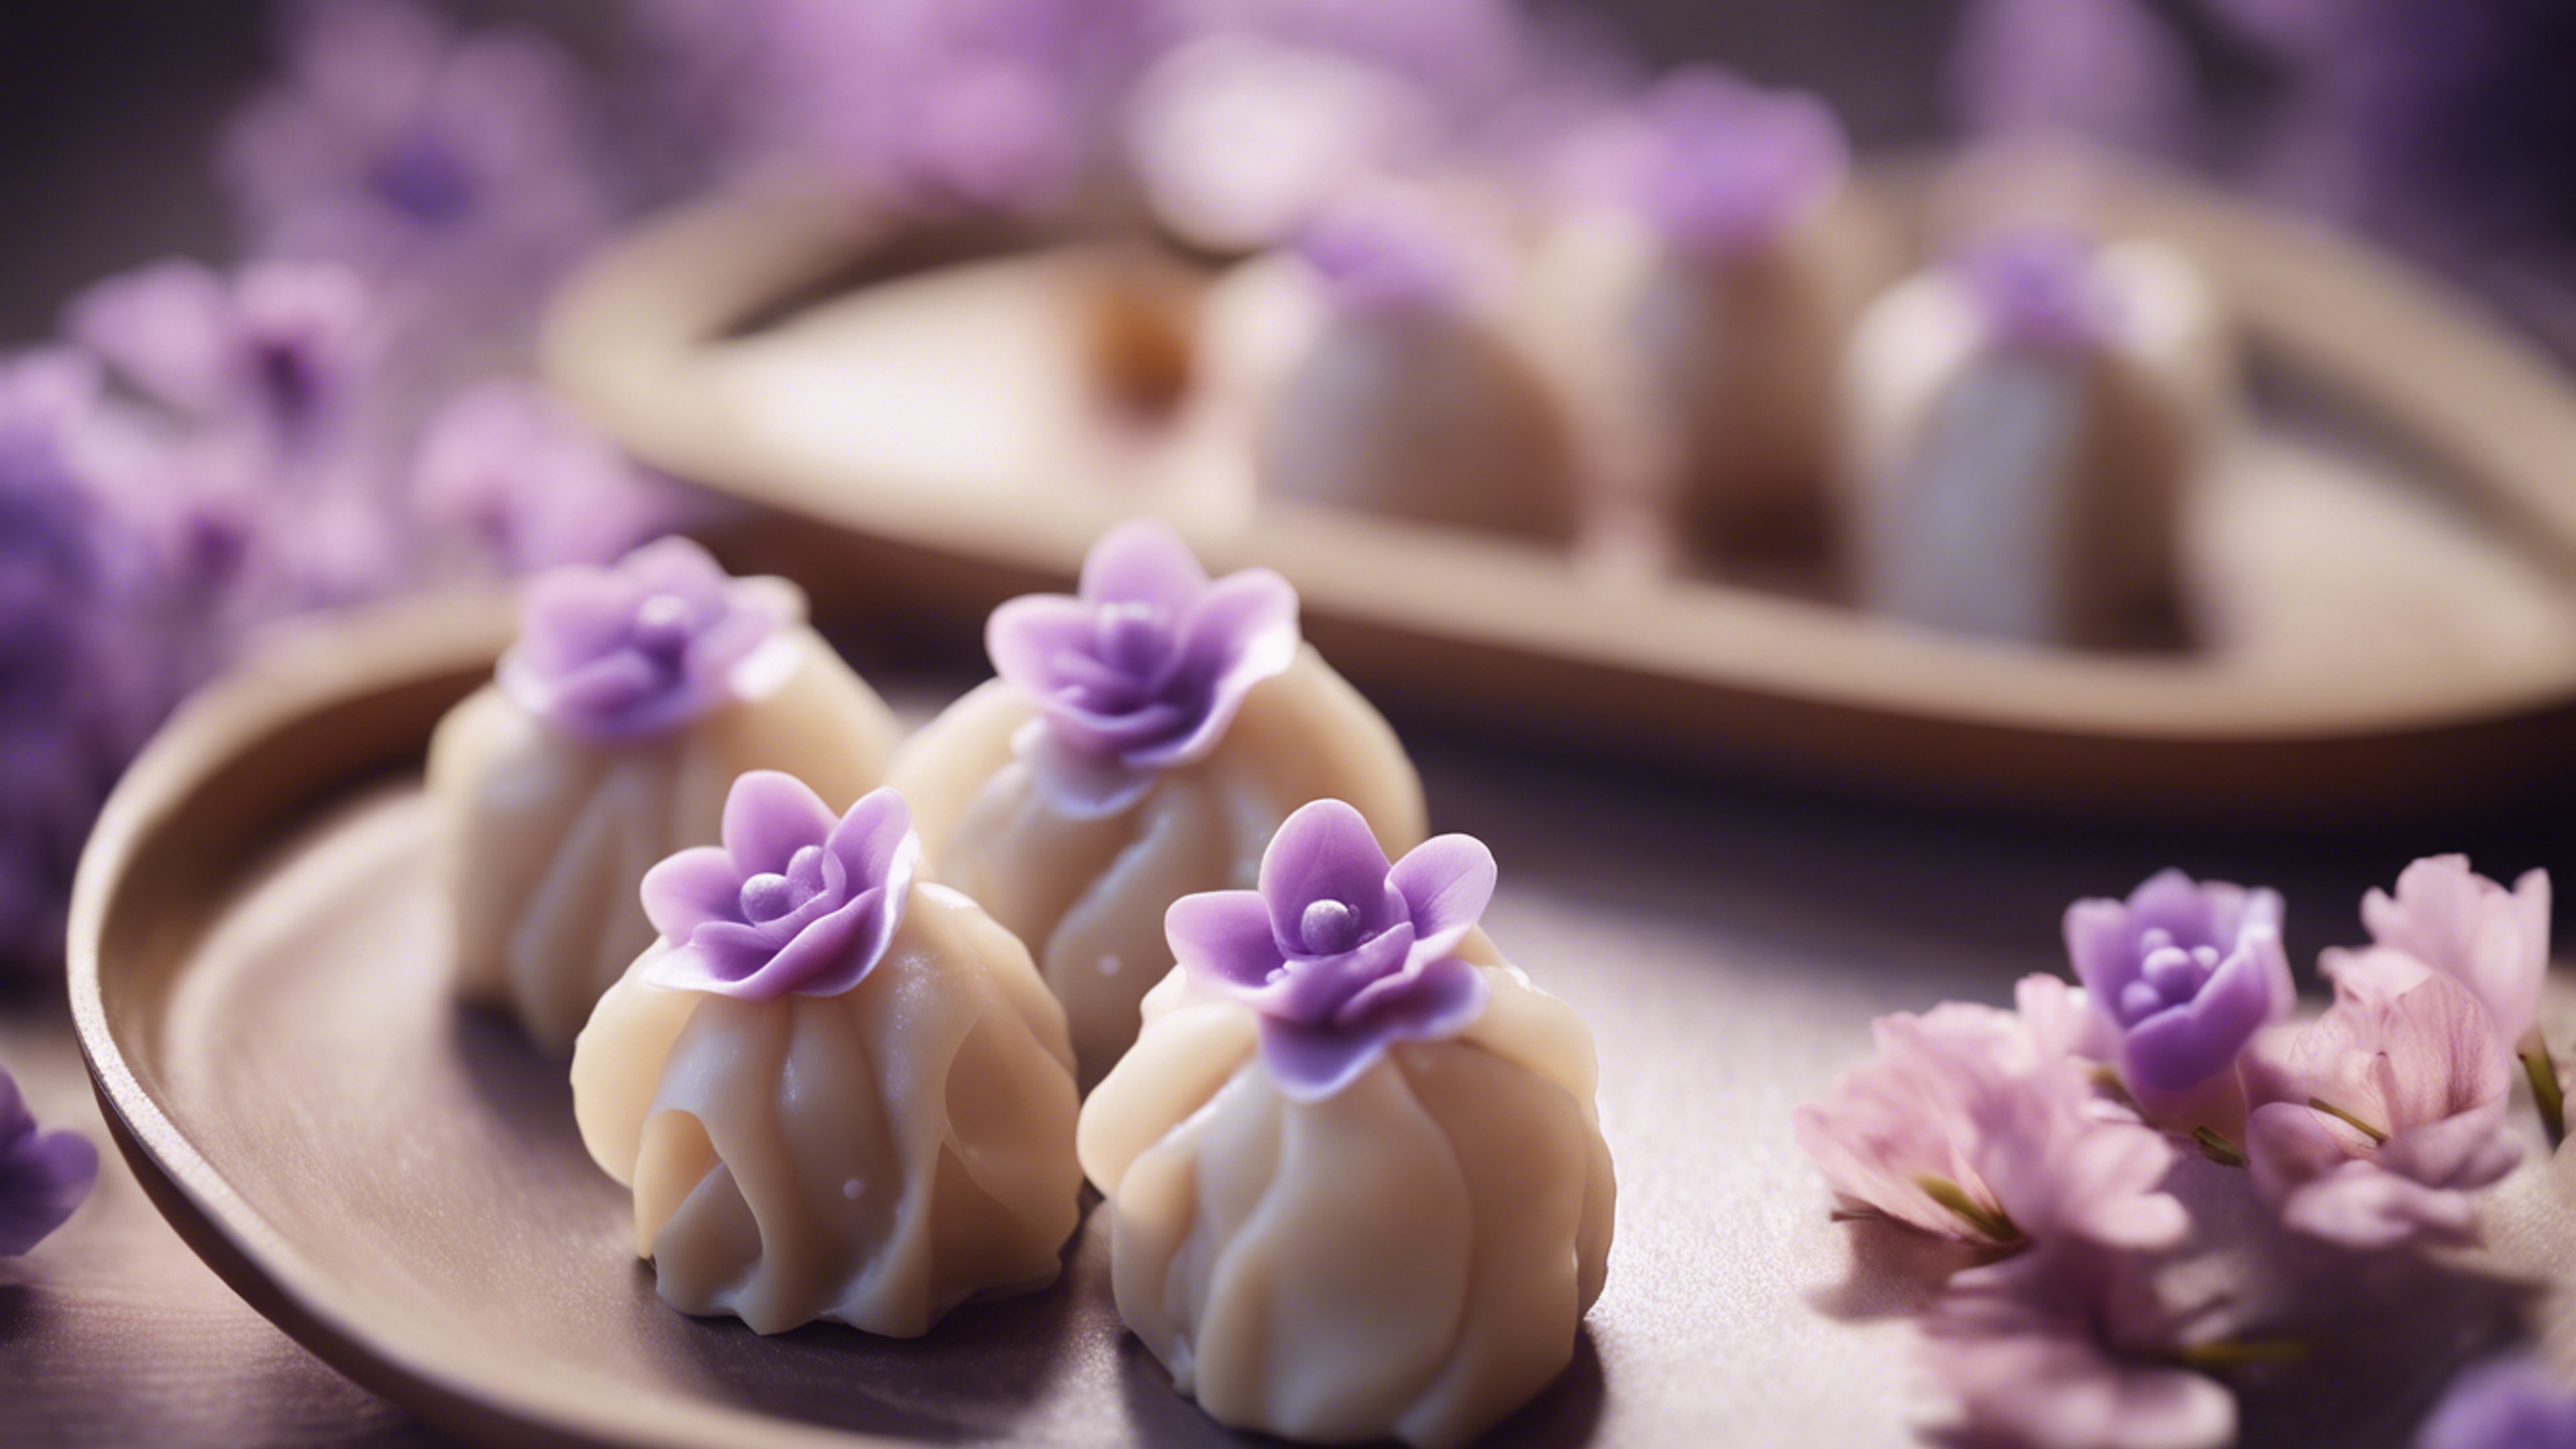 A kawaii styled dim sum dish, with delicate and light purple dumplings shaped like flowers. Behang[29e111c9b013403690b4]